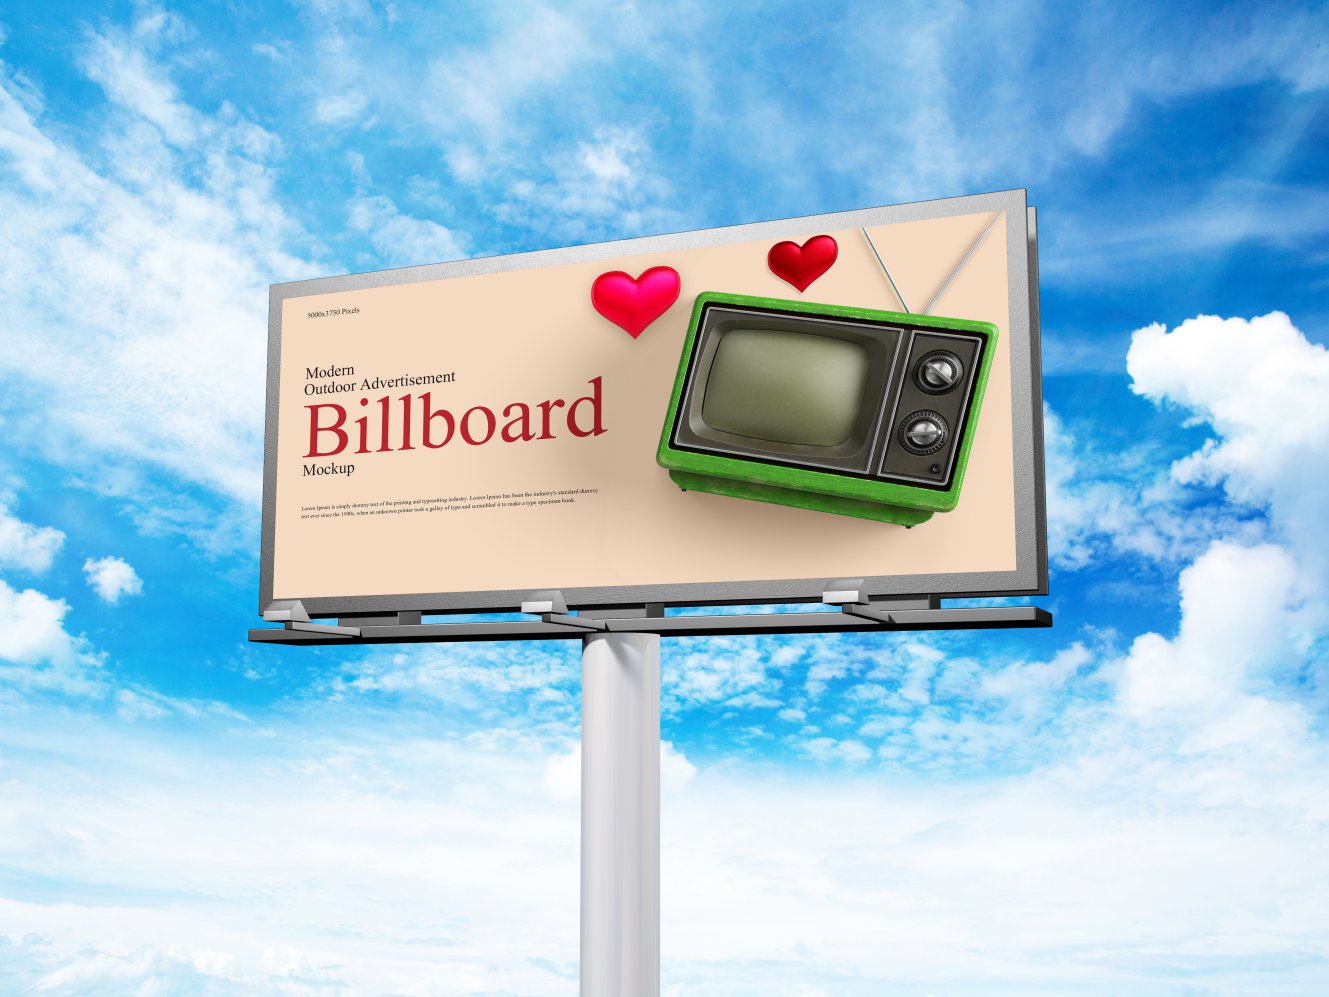 Free Modern Outdoor Advertisement Billboard Mockup скачать бесплатно